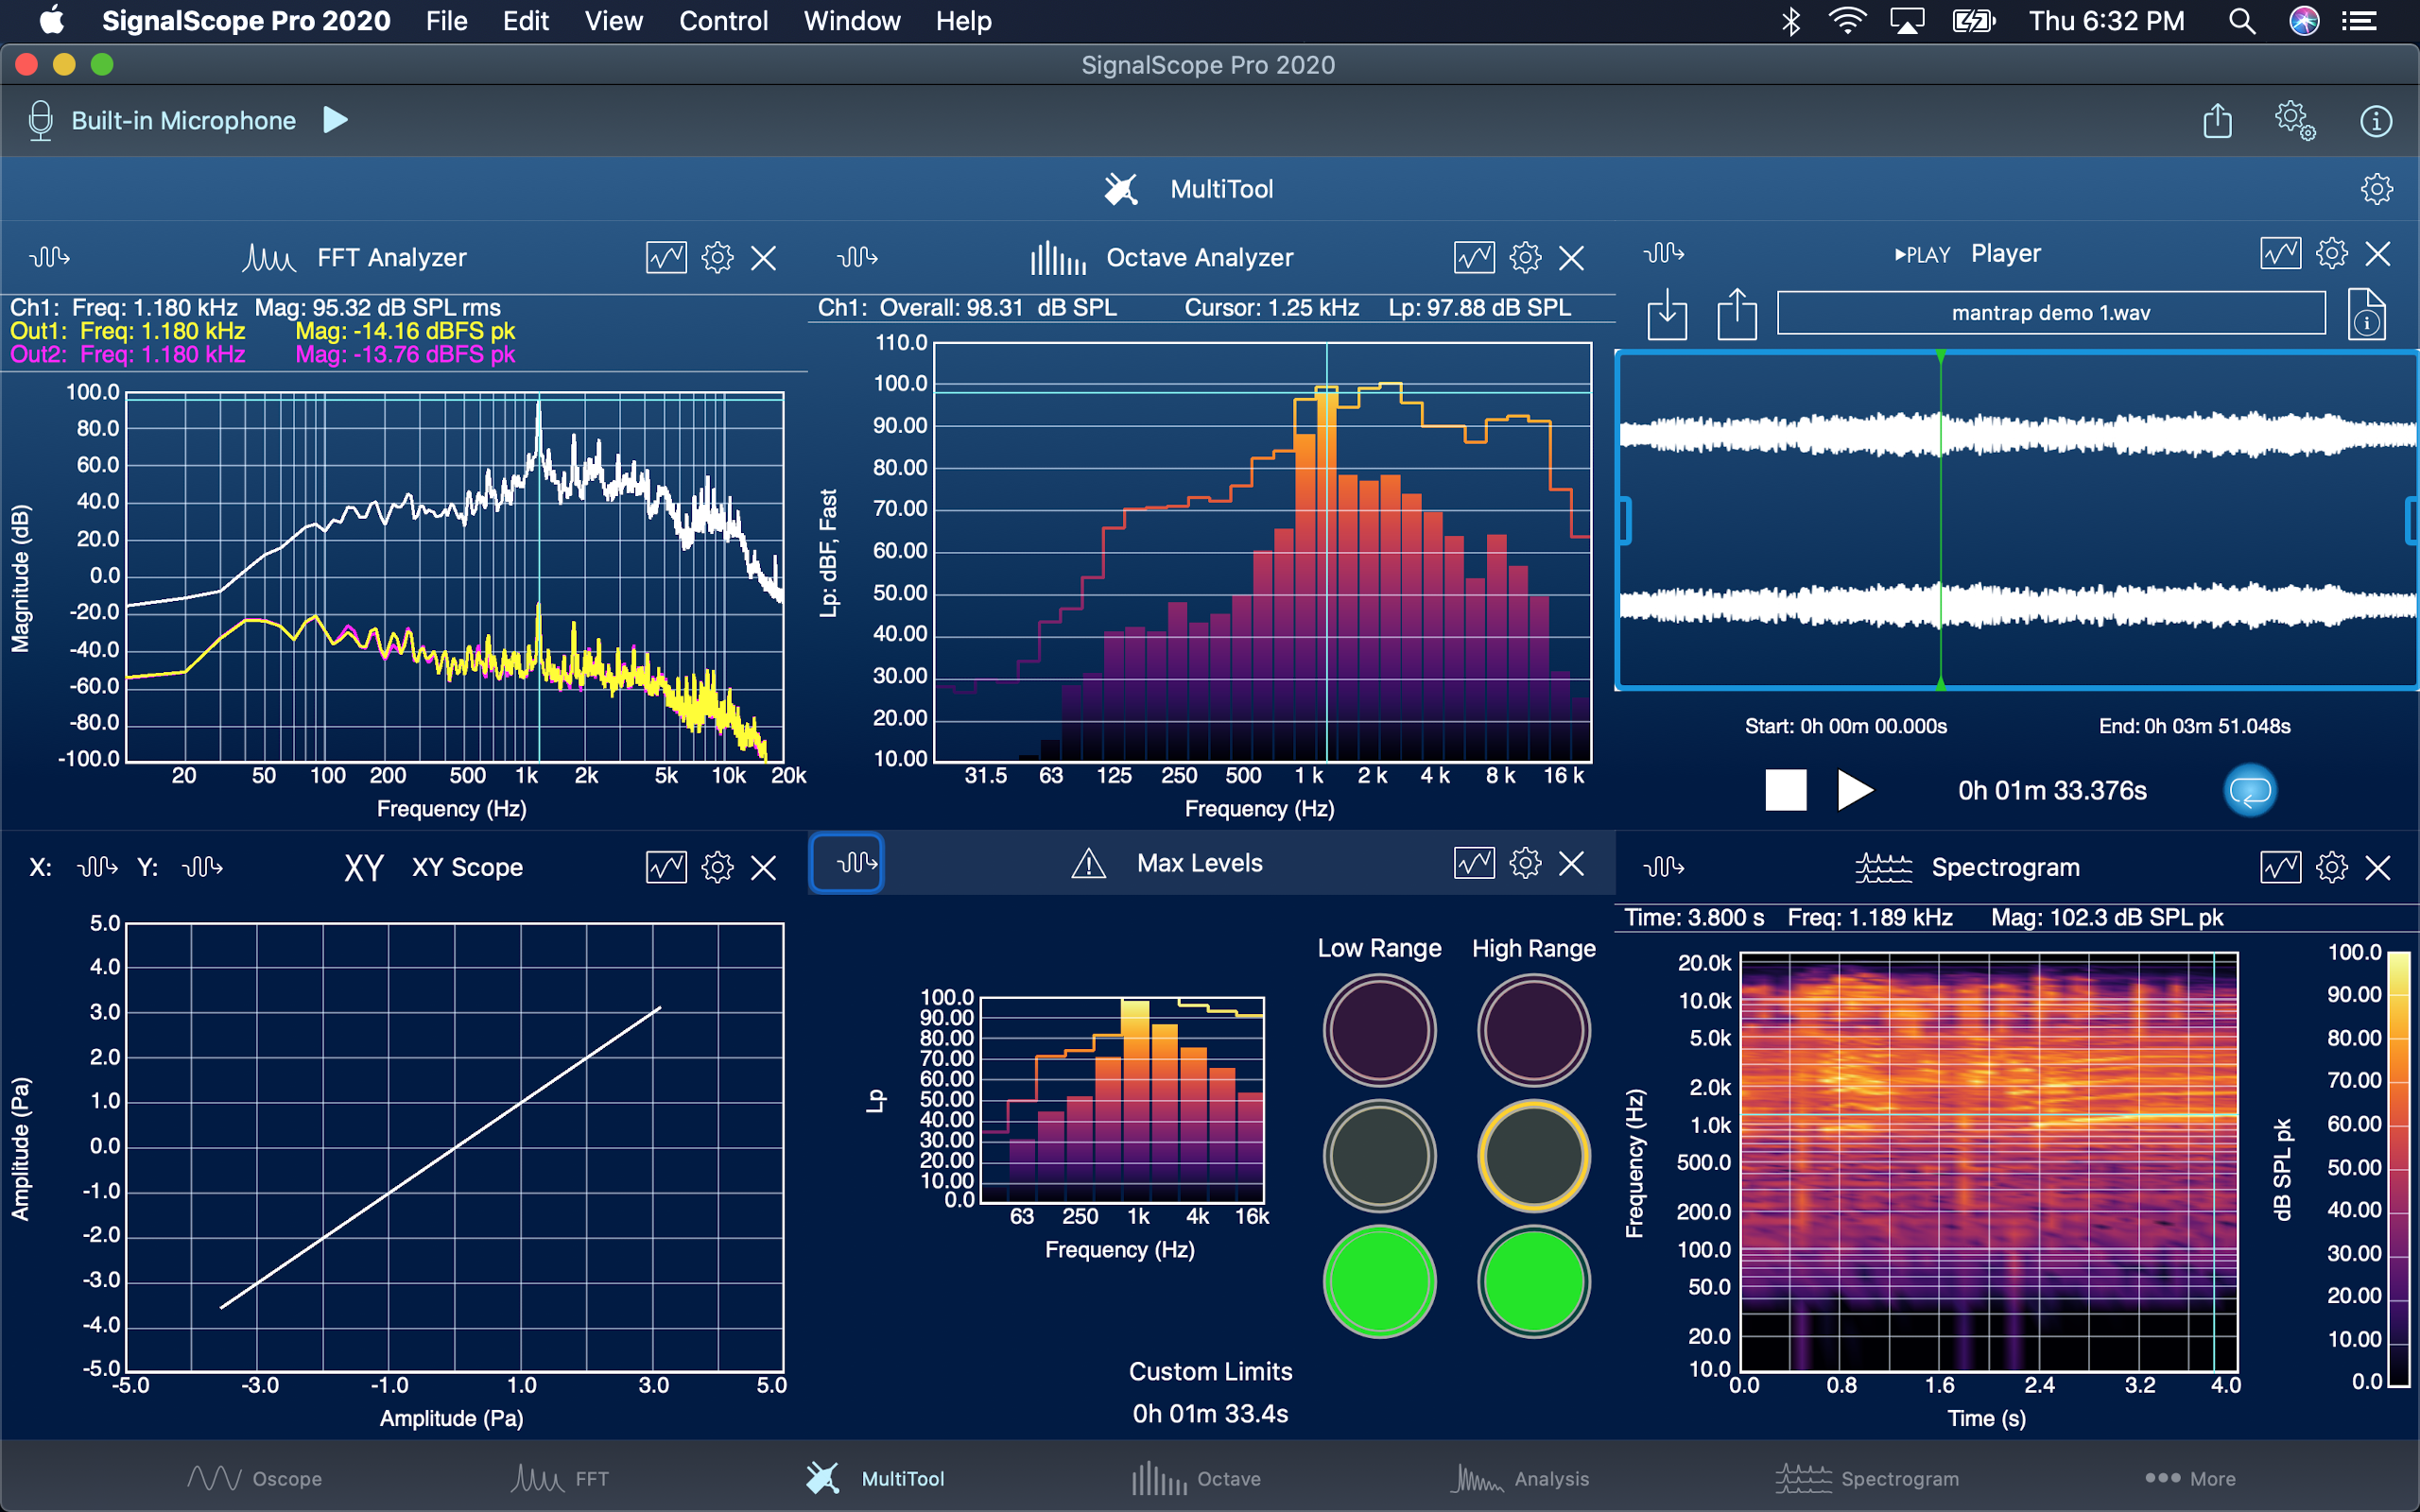 audio visualizer software mac